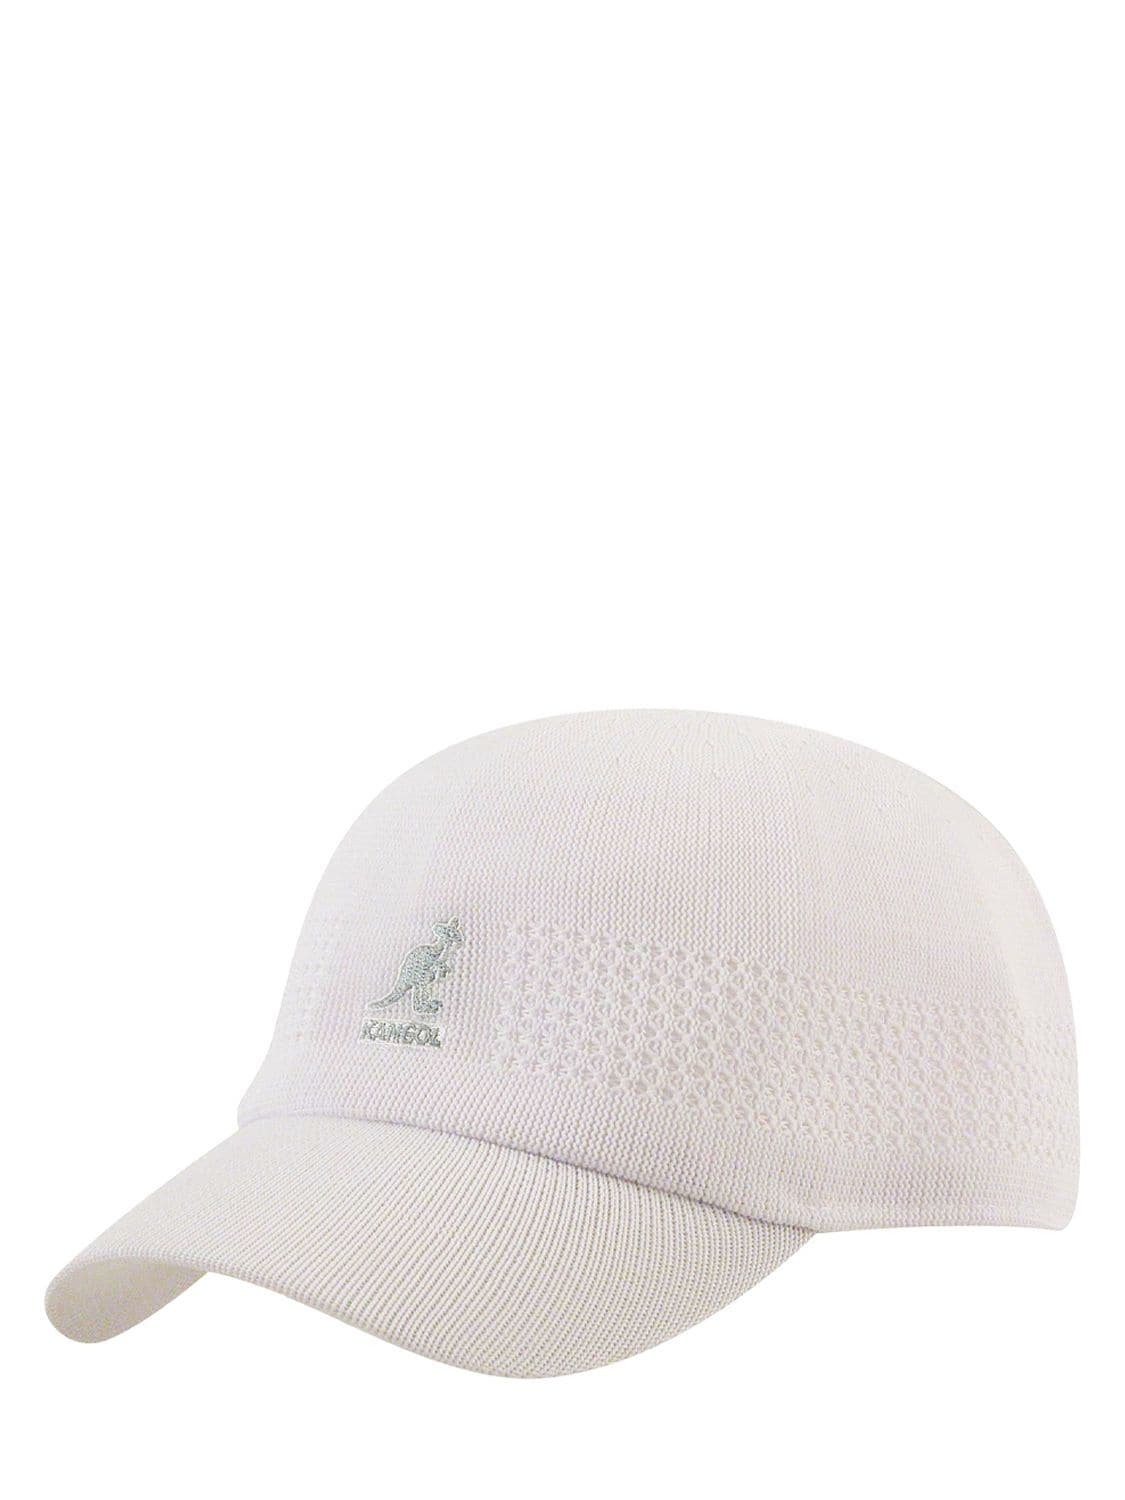 Kangol Tropic Ventair棒球帽 In White